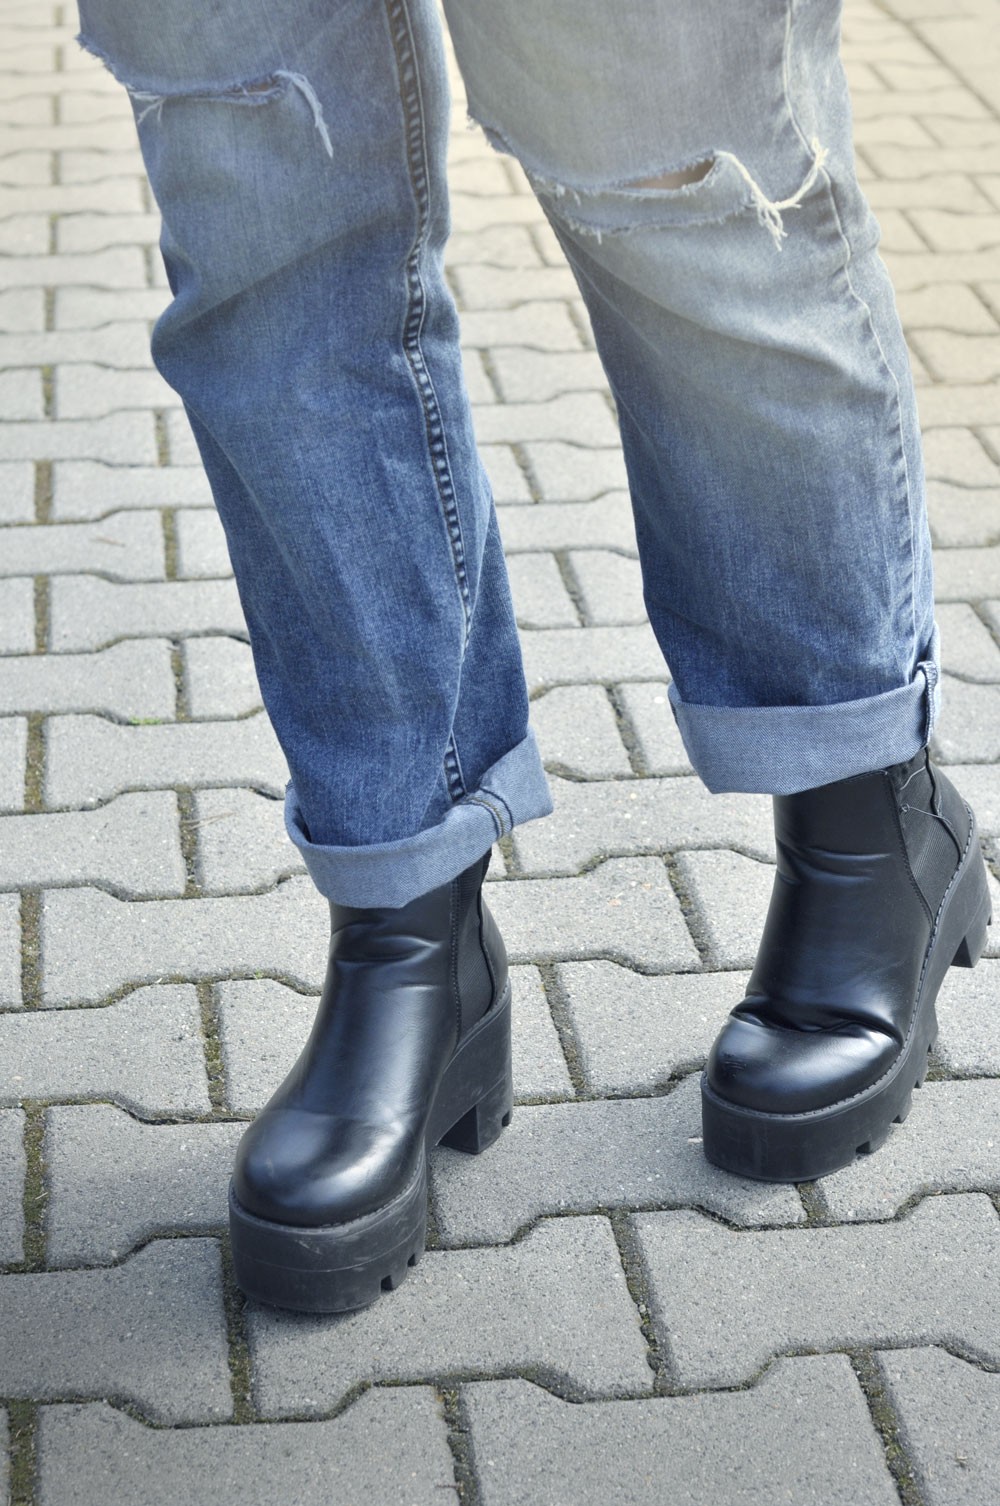 carebear-ripped jeans-ramoneska-sequin shoes-kizzy (8)